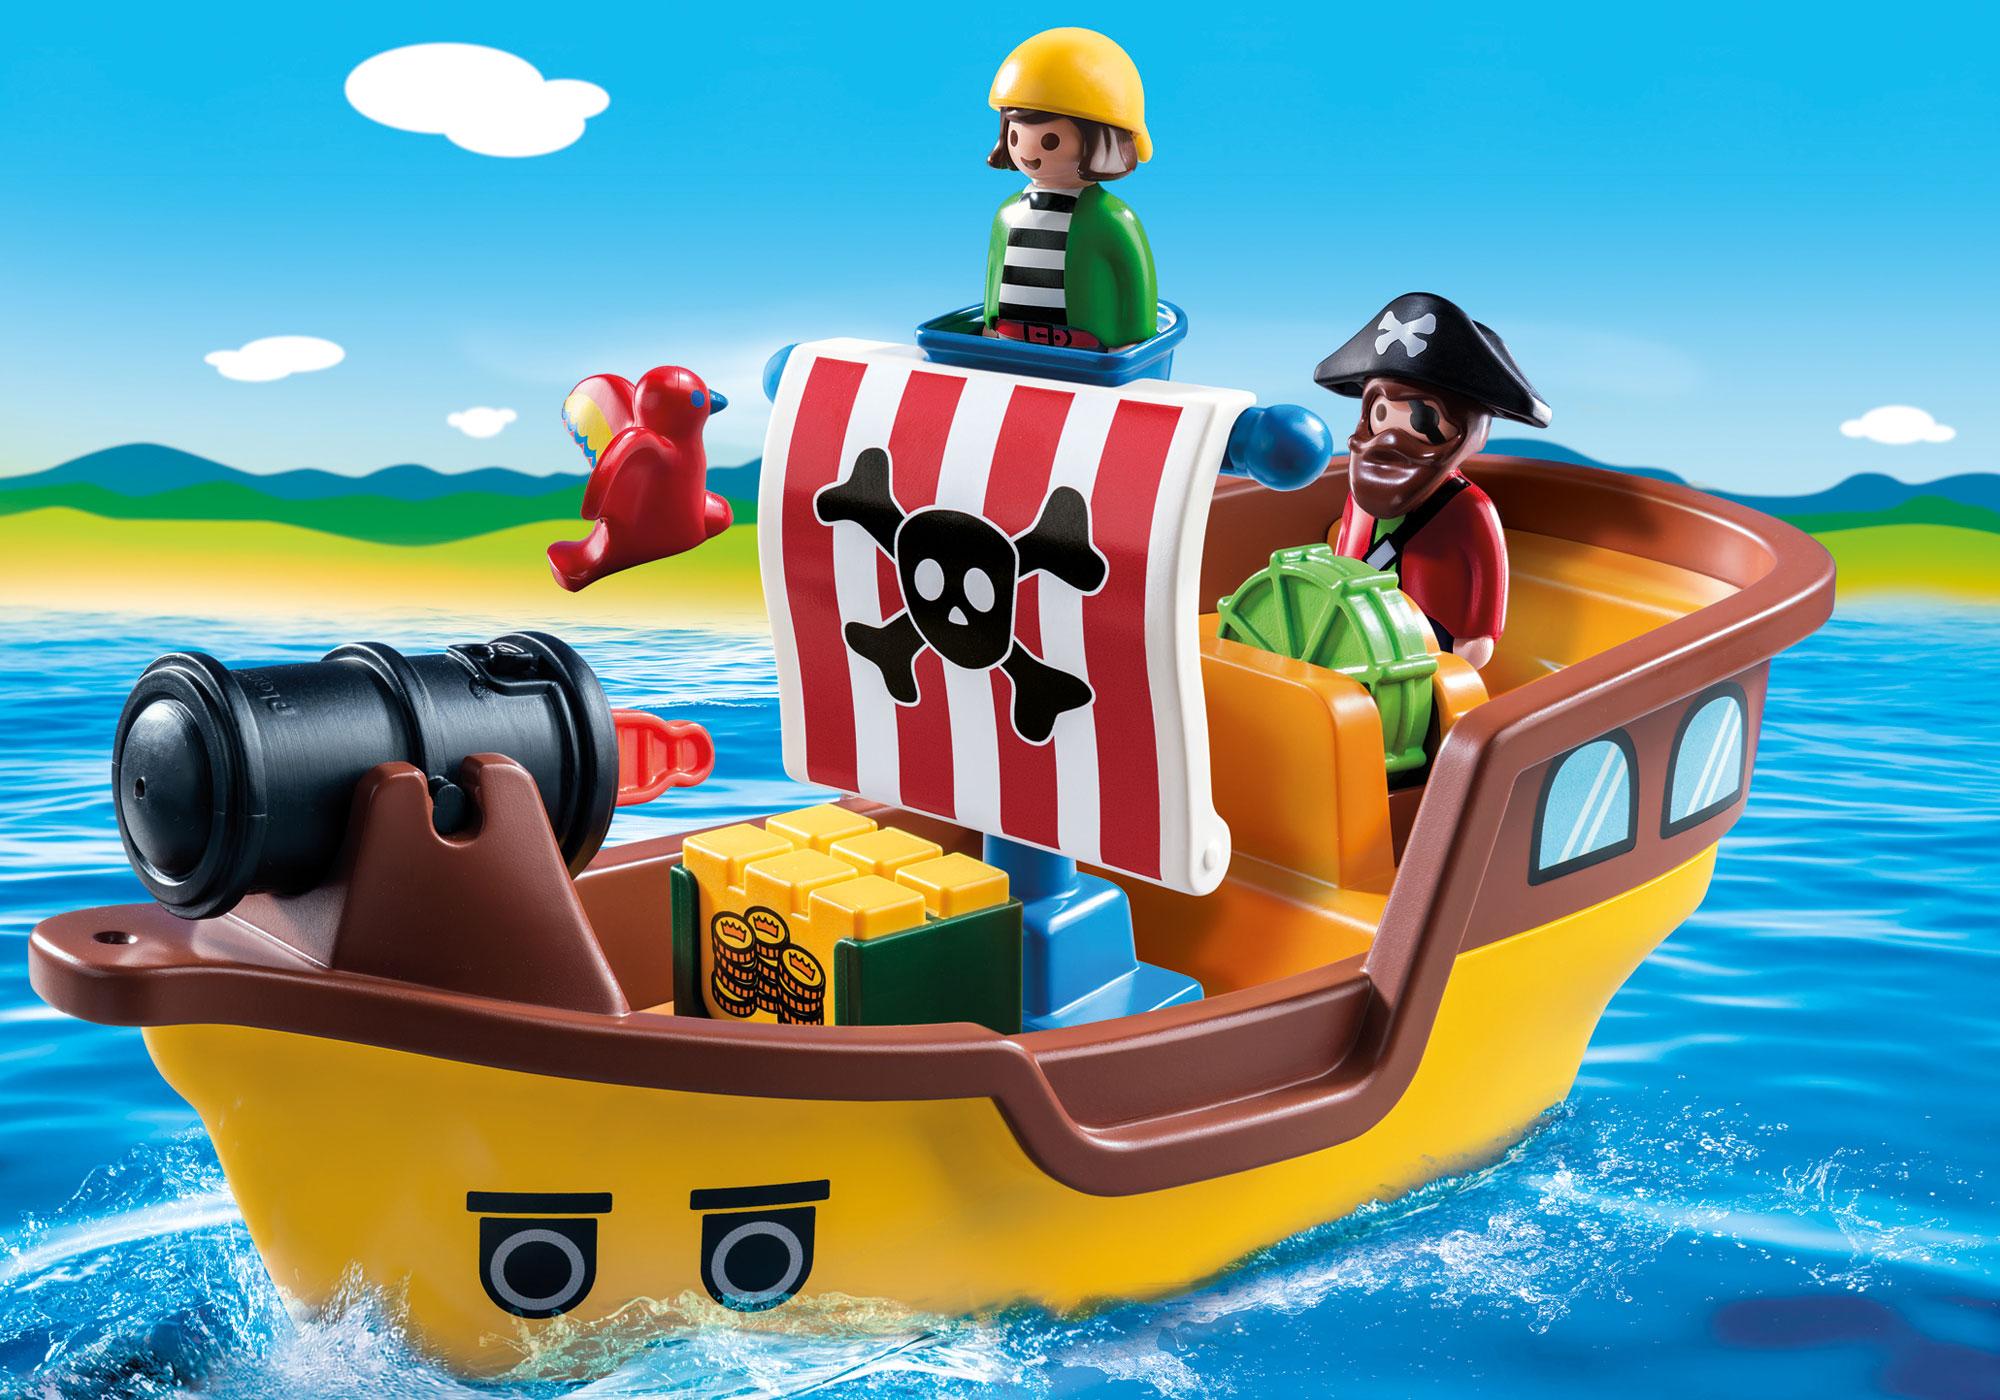 bateau de pirates playmobil